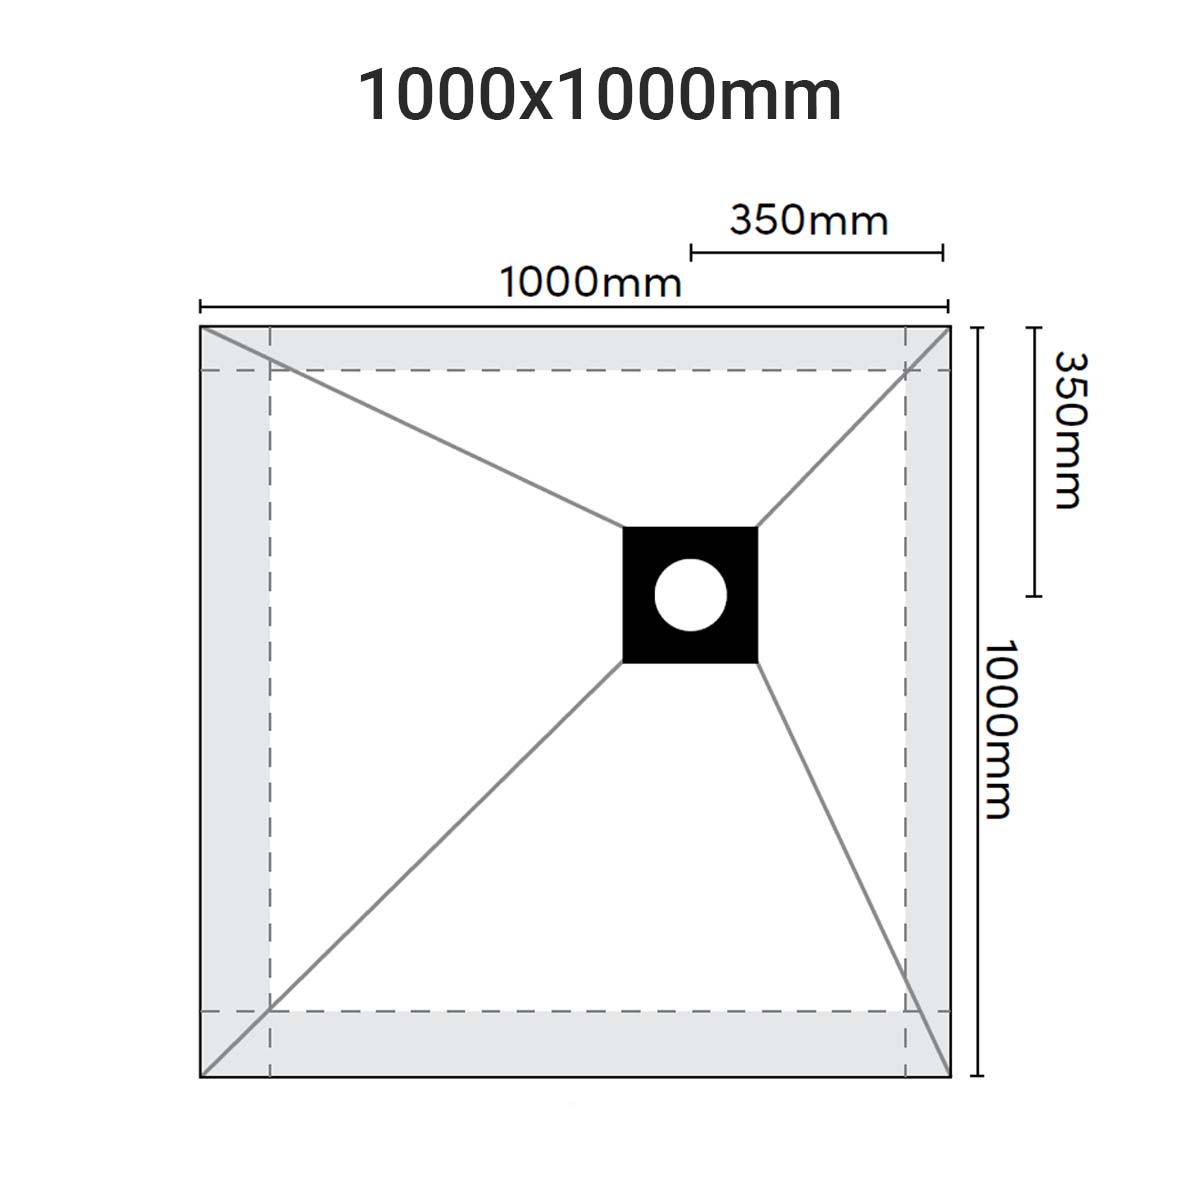 sharpslope square drain 1000x1000mm dimensions